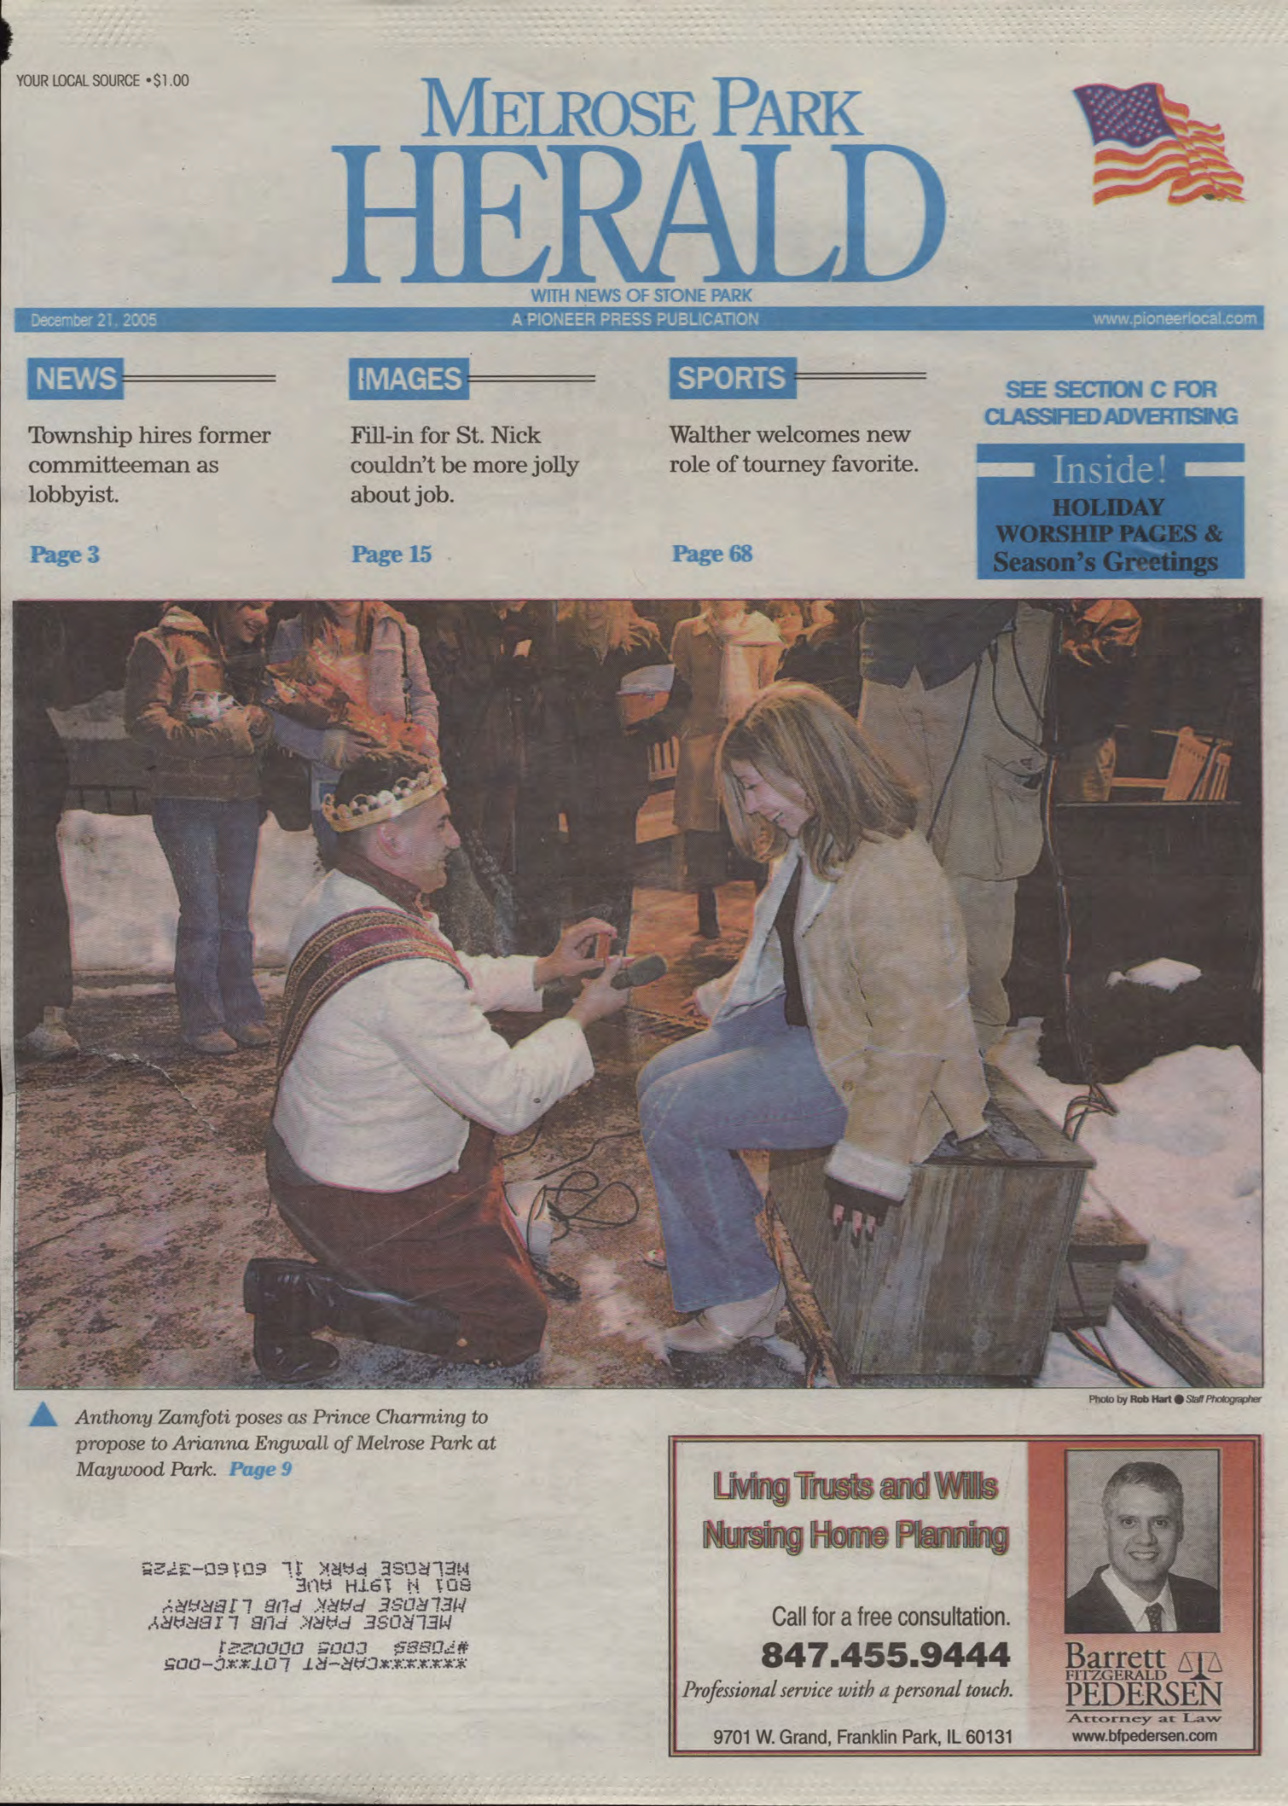 The Herald – 20051221